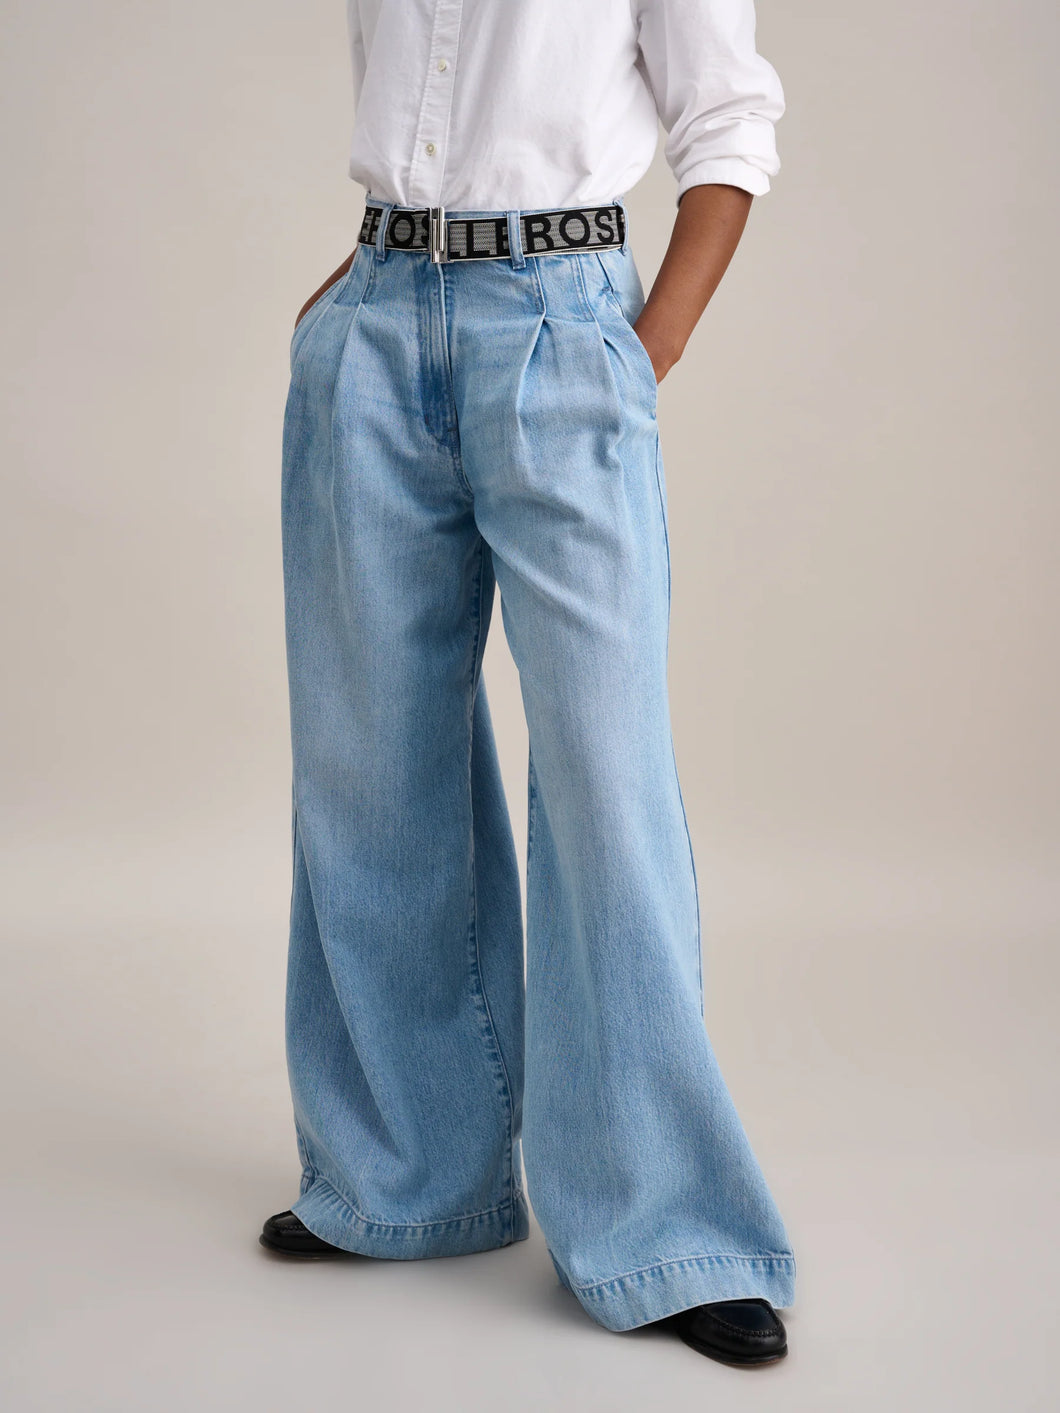 Bellerose Pops Jeans - Light Blue